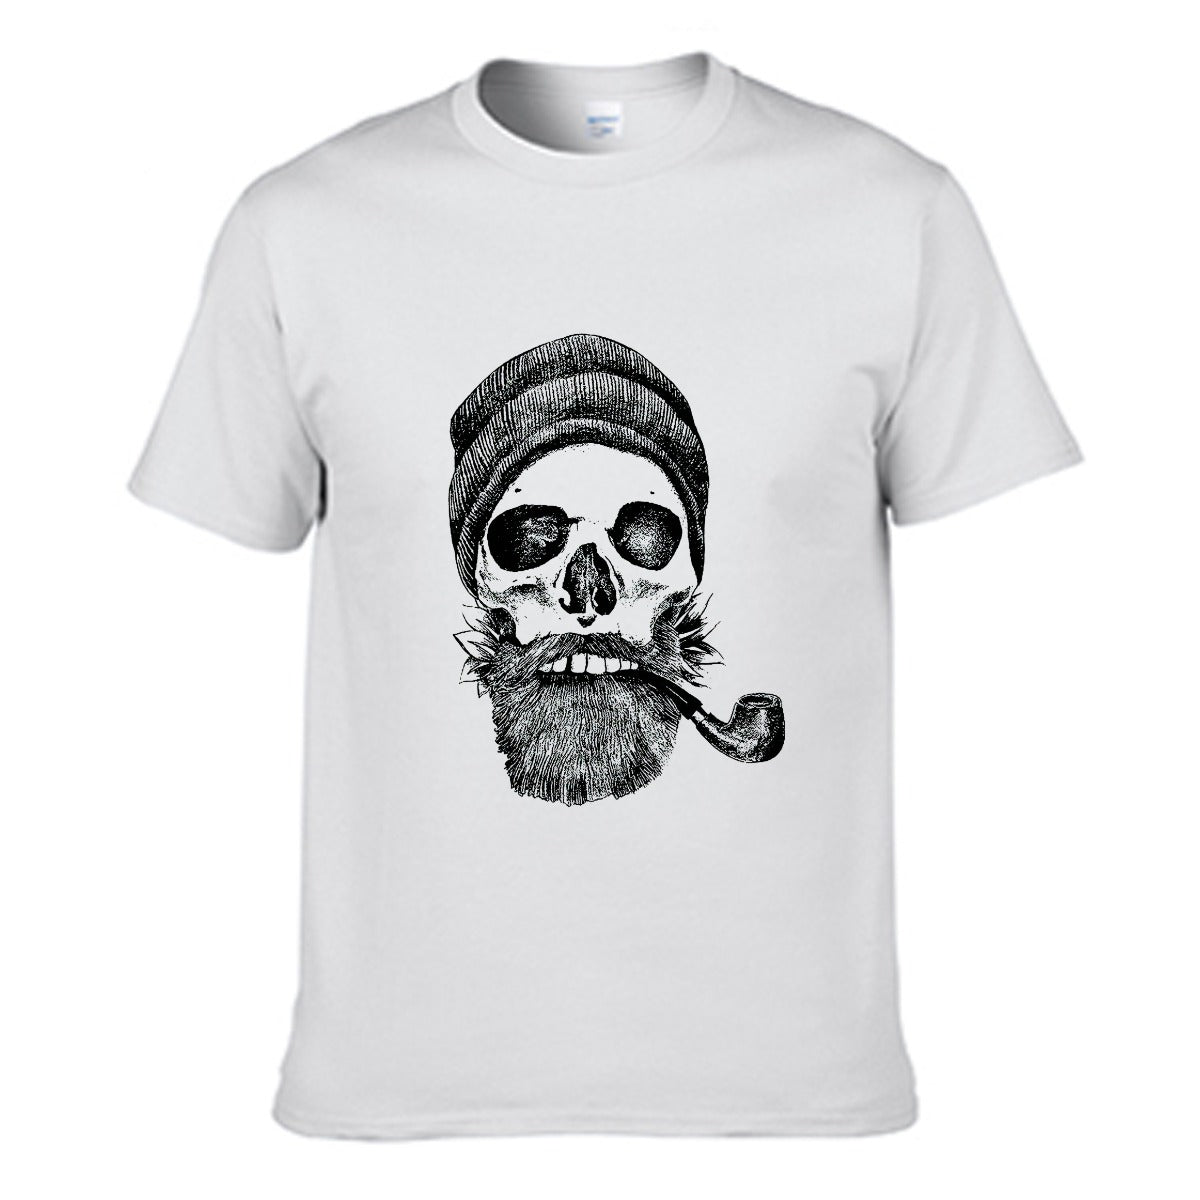 Smoking Skull Men's T-shirt (100% Cotton) - T0212